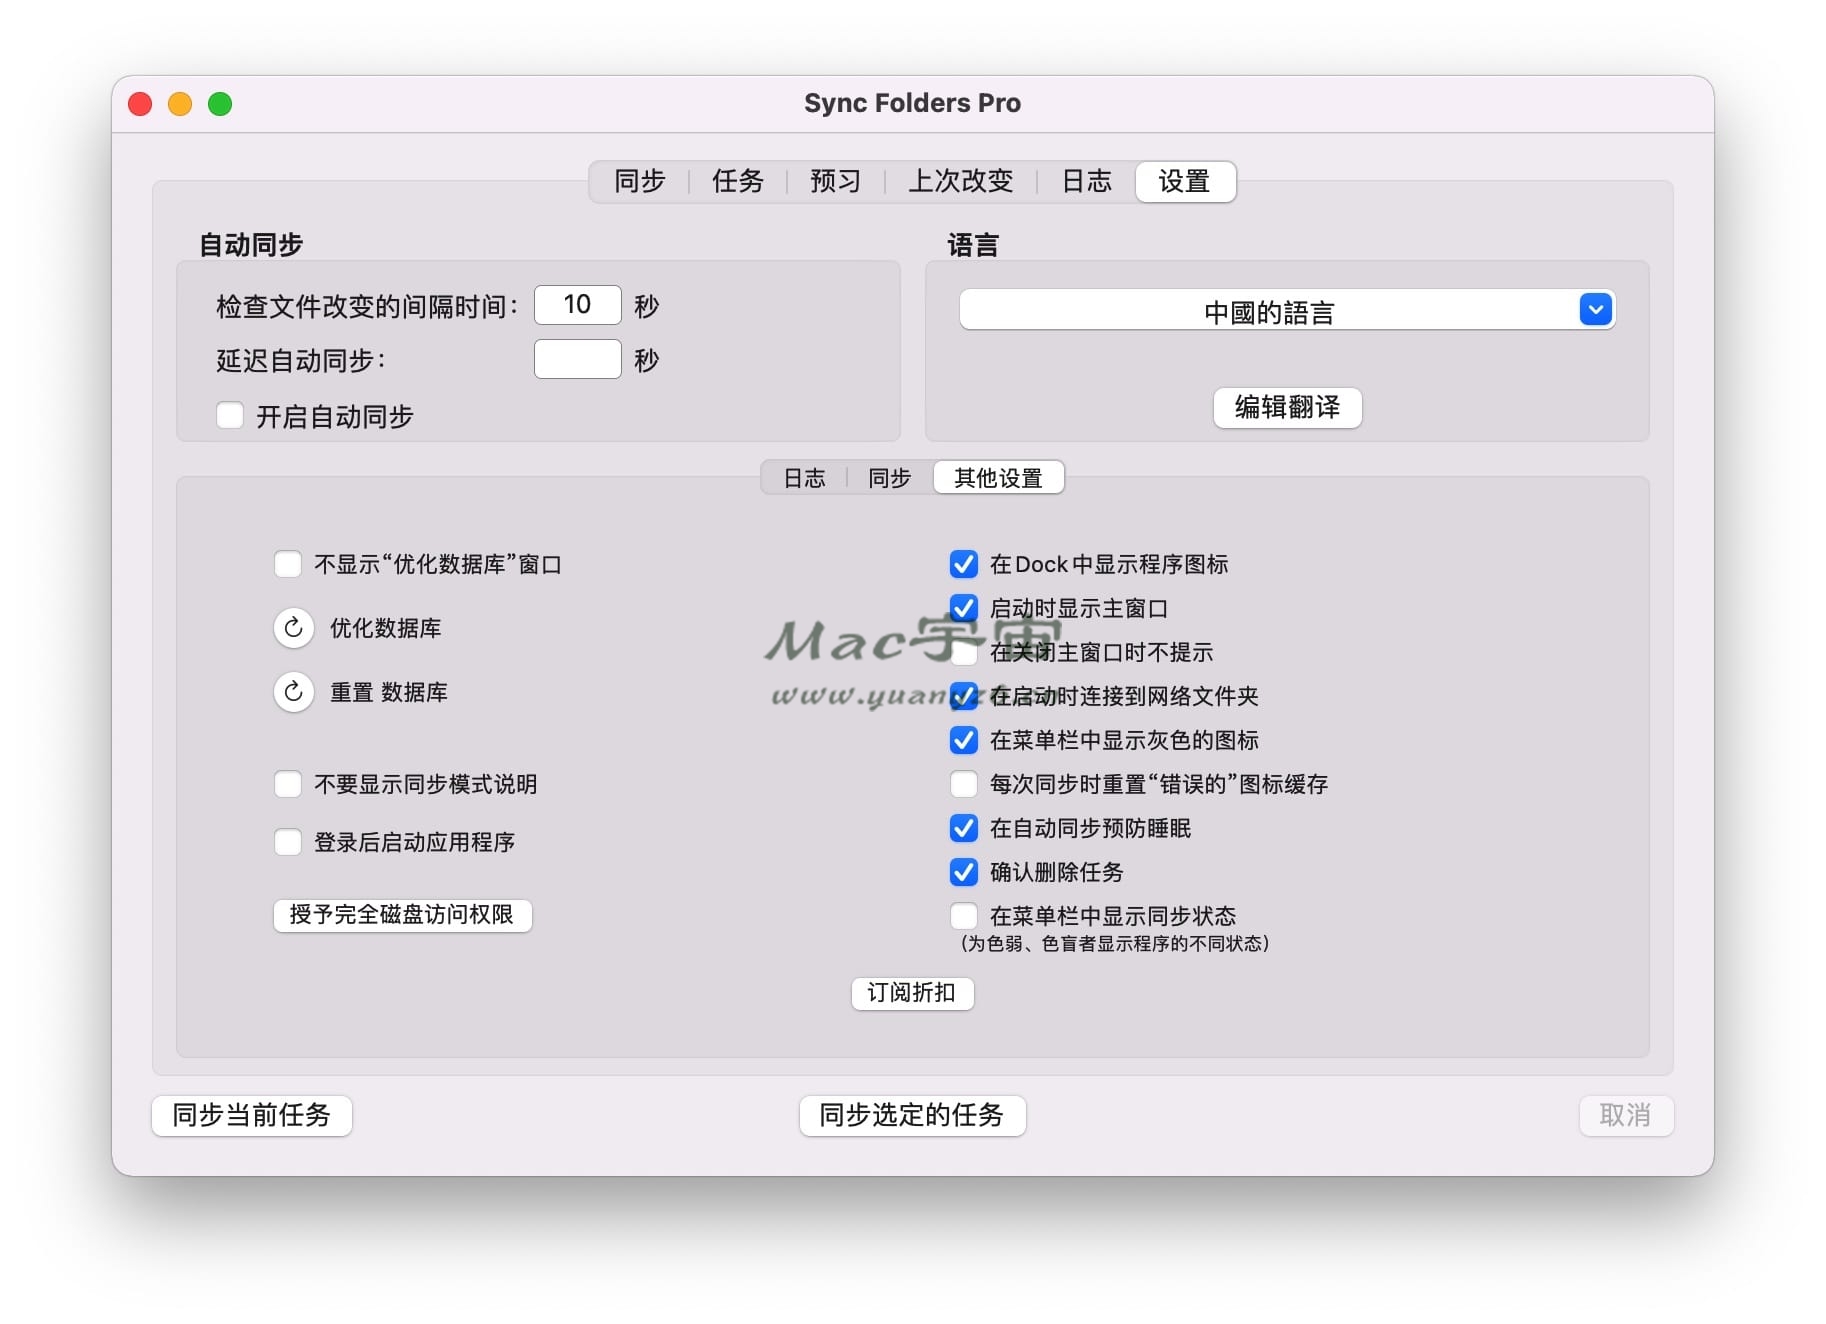 Sync Folders Pro for Mac v4.7.2 文件夹同步工具 苹果电脑